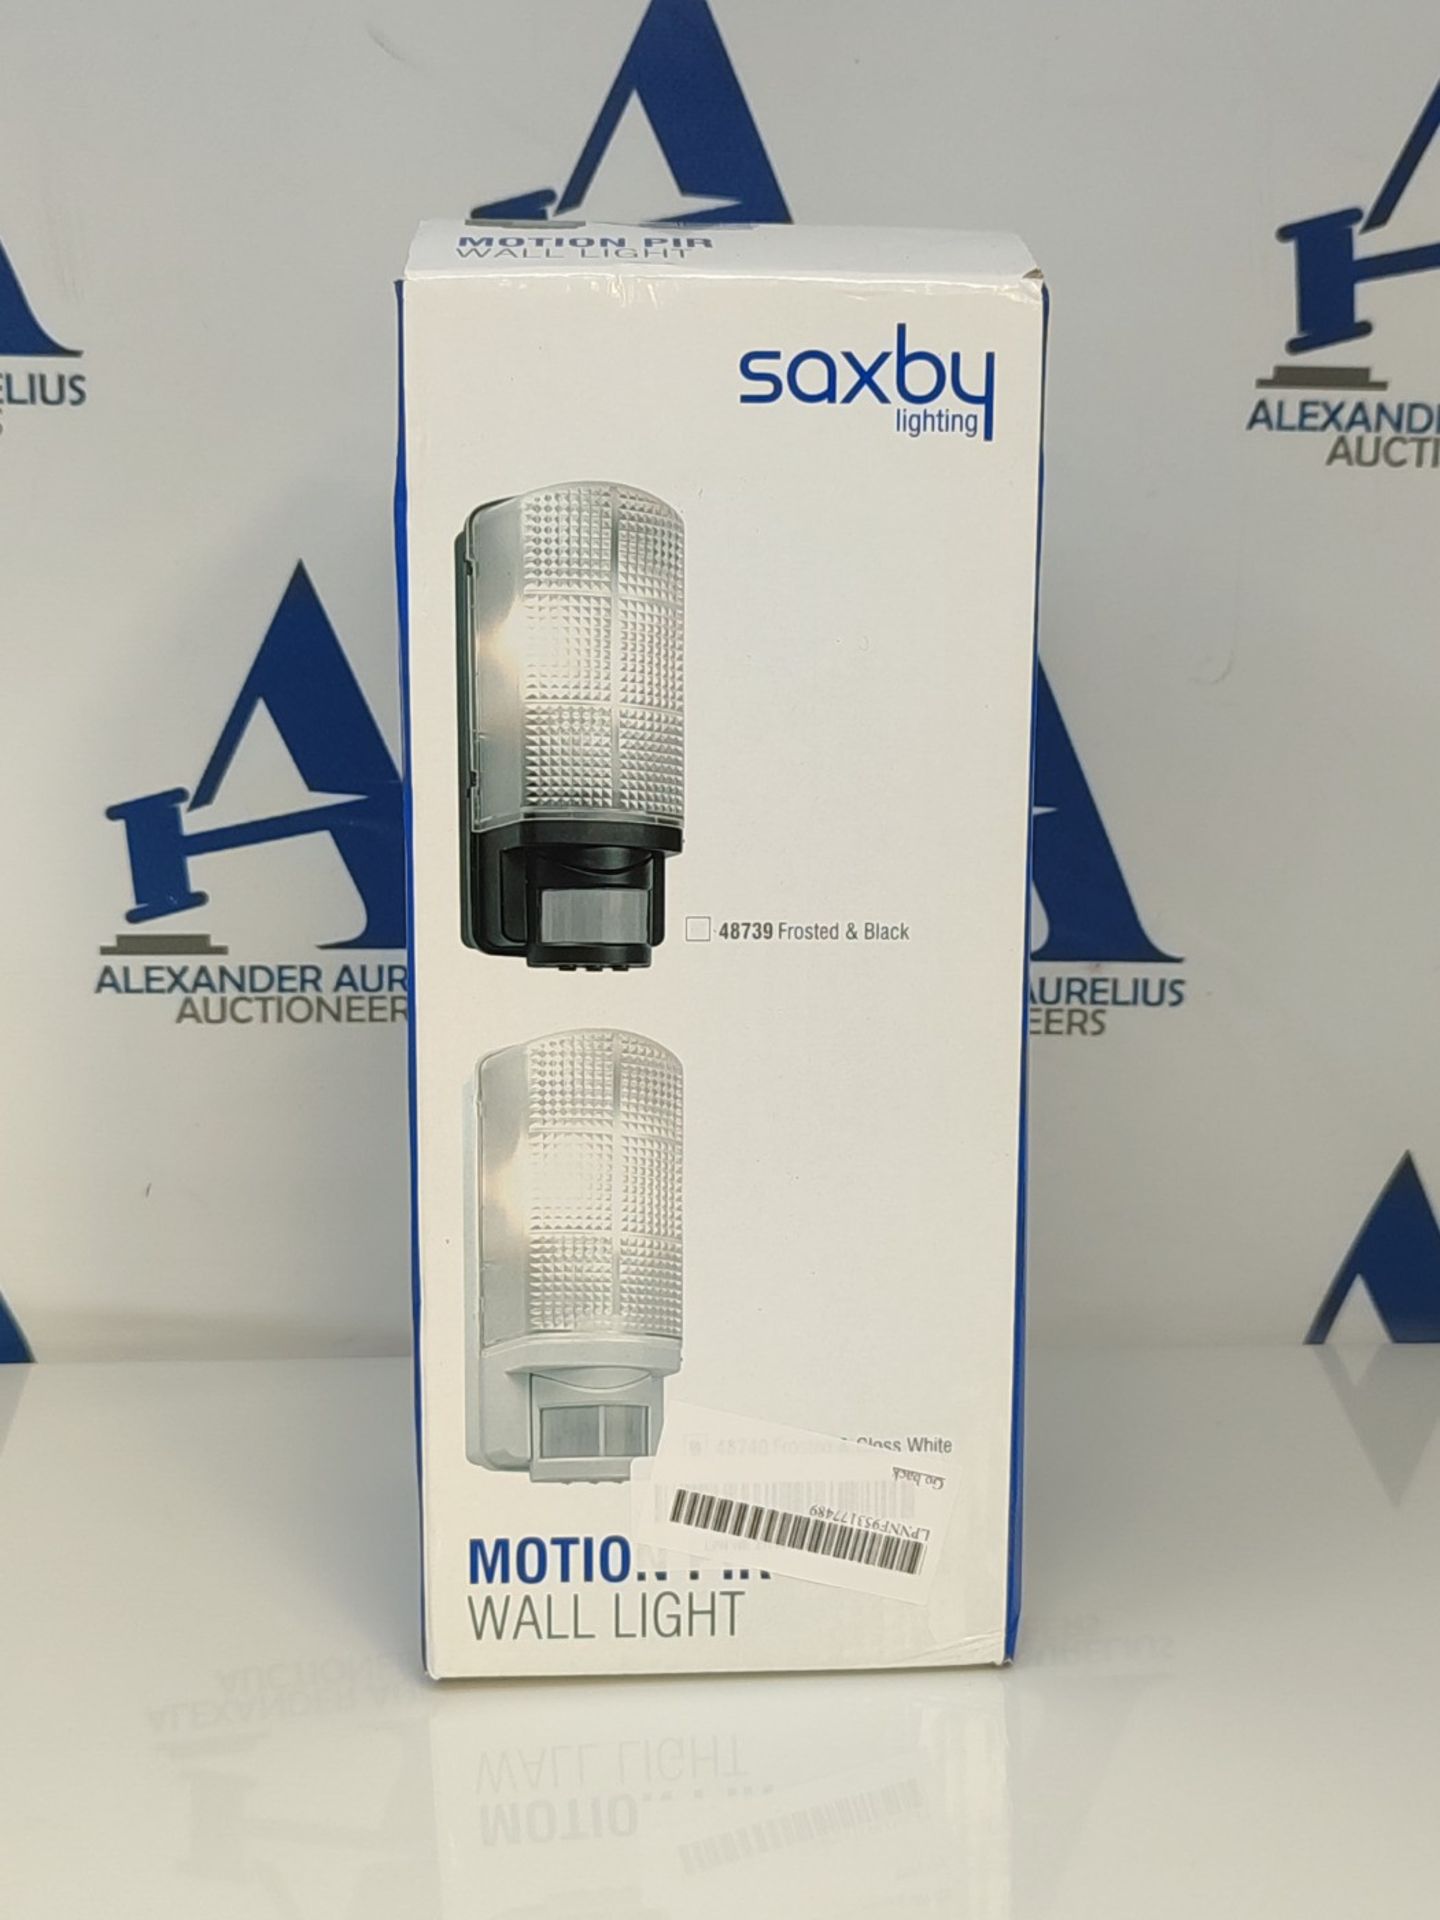 Saxby Rh60 Outside Sensor Light - Mains Powered Wall Outdoor Pir Wall Lights (White Fi - Image 2 of 3